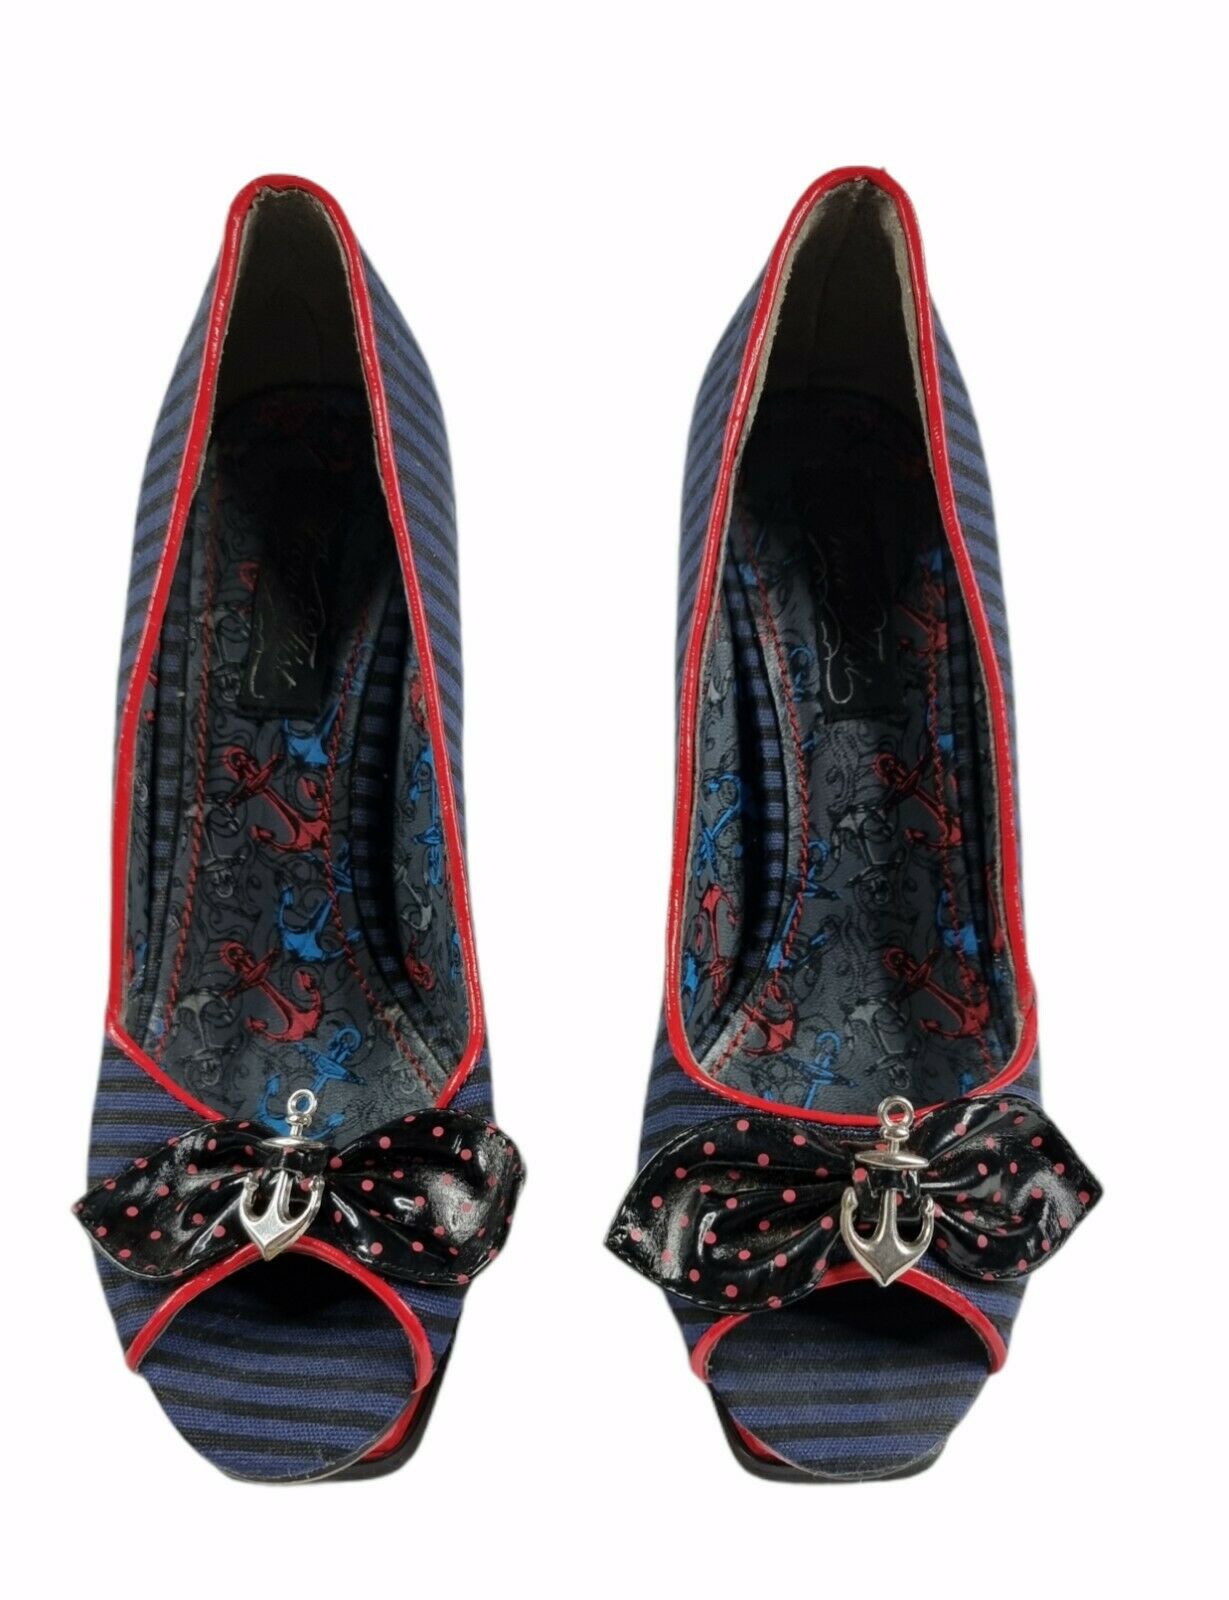 Womens High Heels Platform Shoes Iron Fist US 7 Sailor Anchor Punk Emo Red Blue